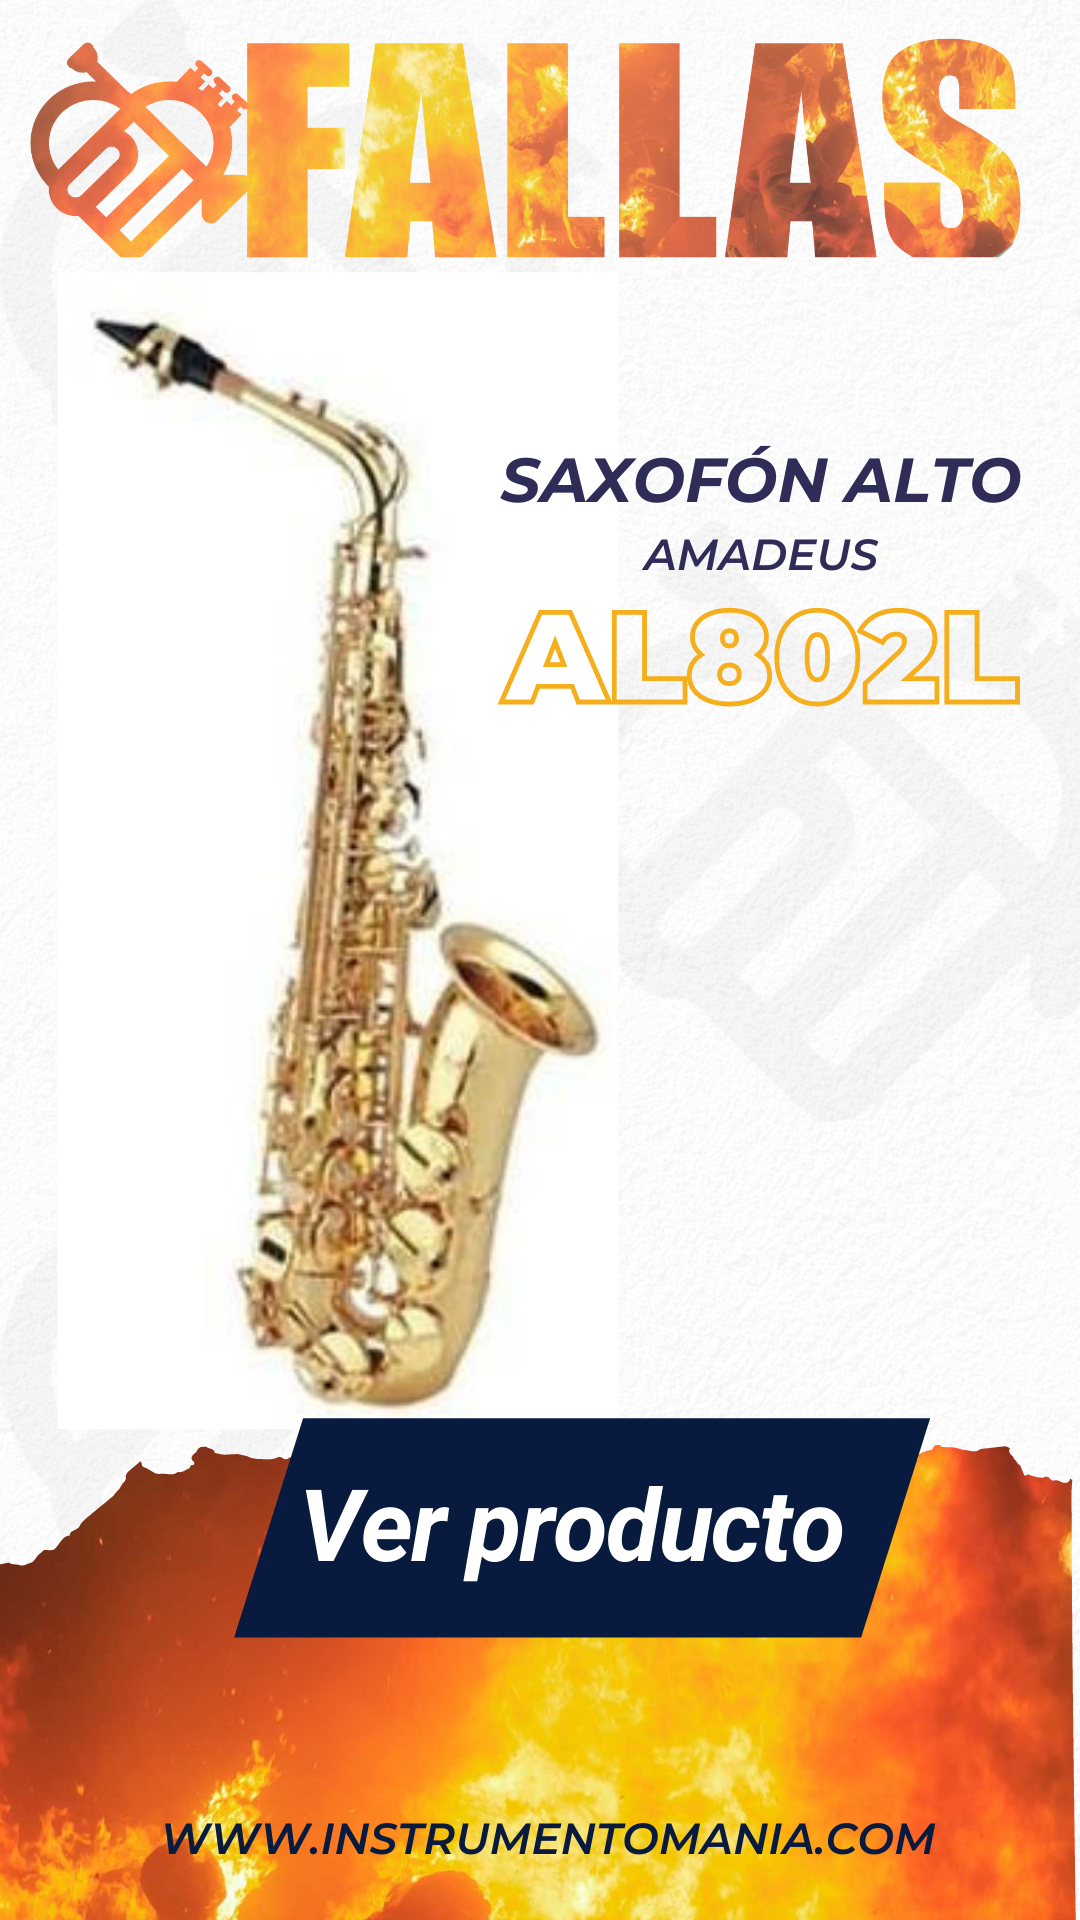 saxofon alto